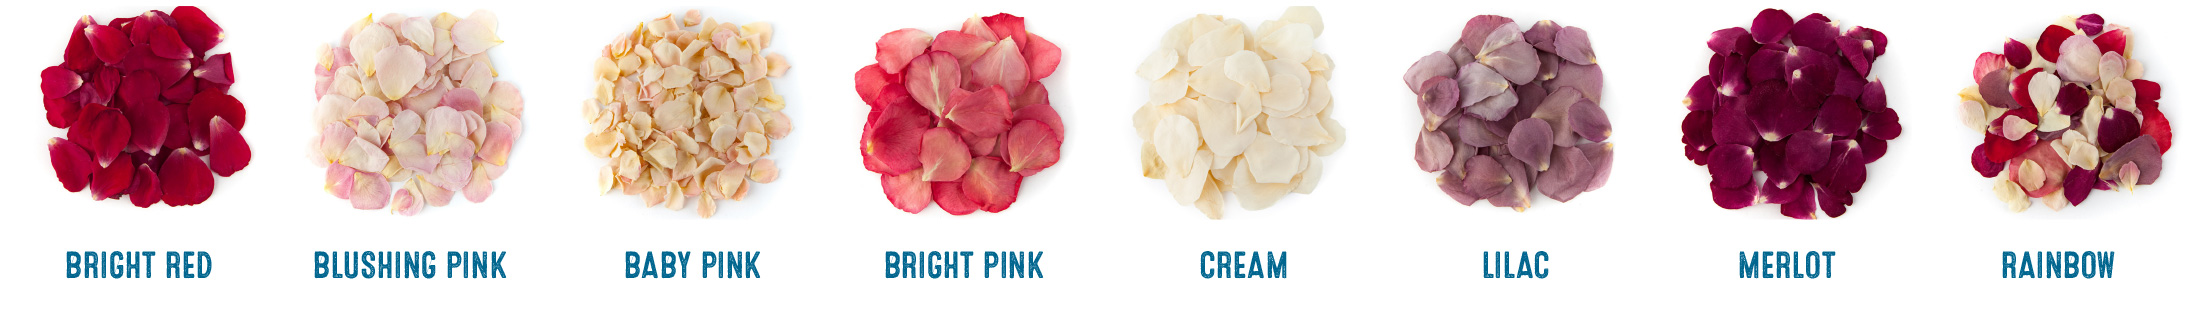 Biodegradable Petal Flower Confetti Raspberry Cream Rose Petals 50 Bags